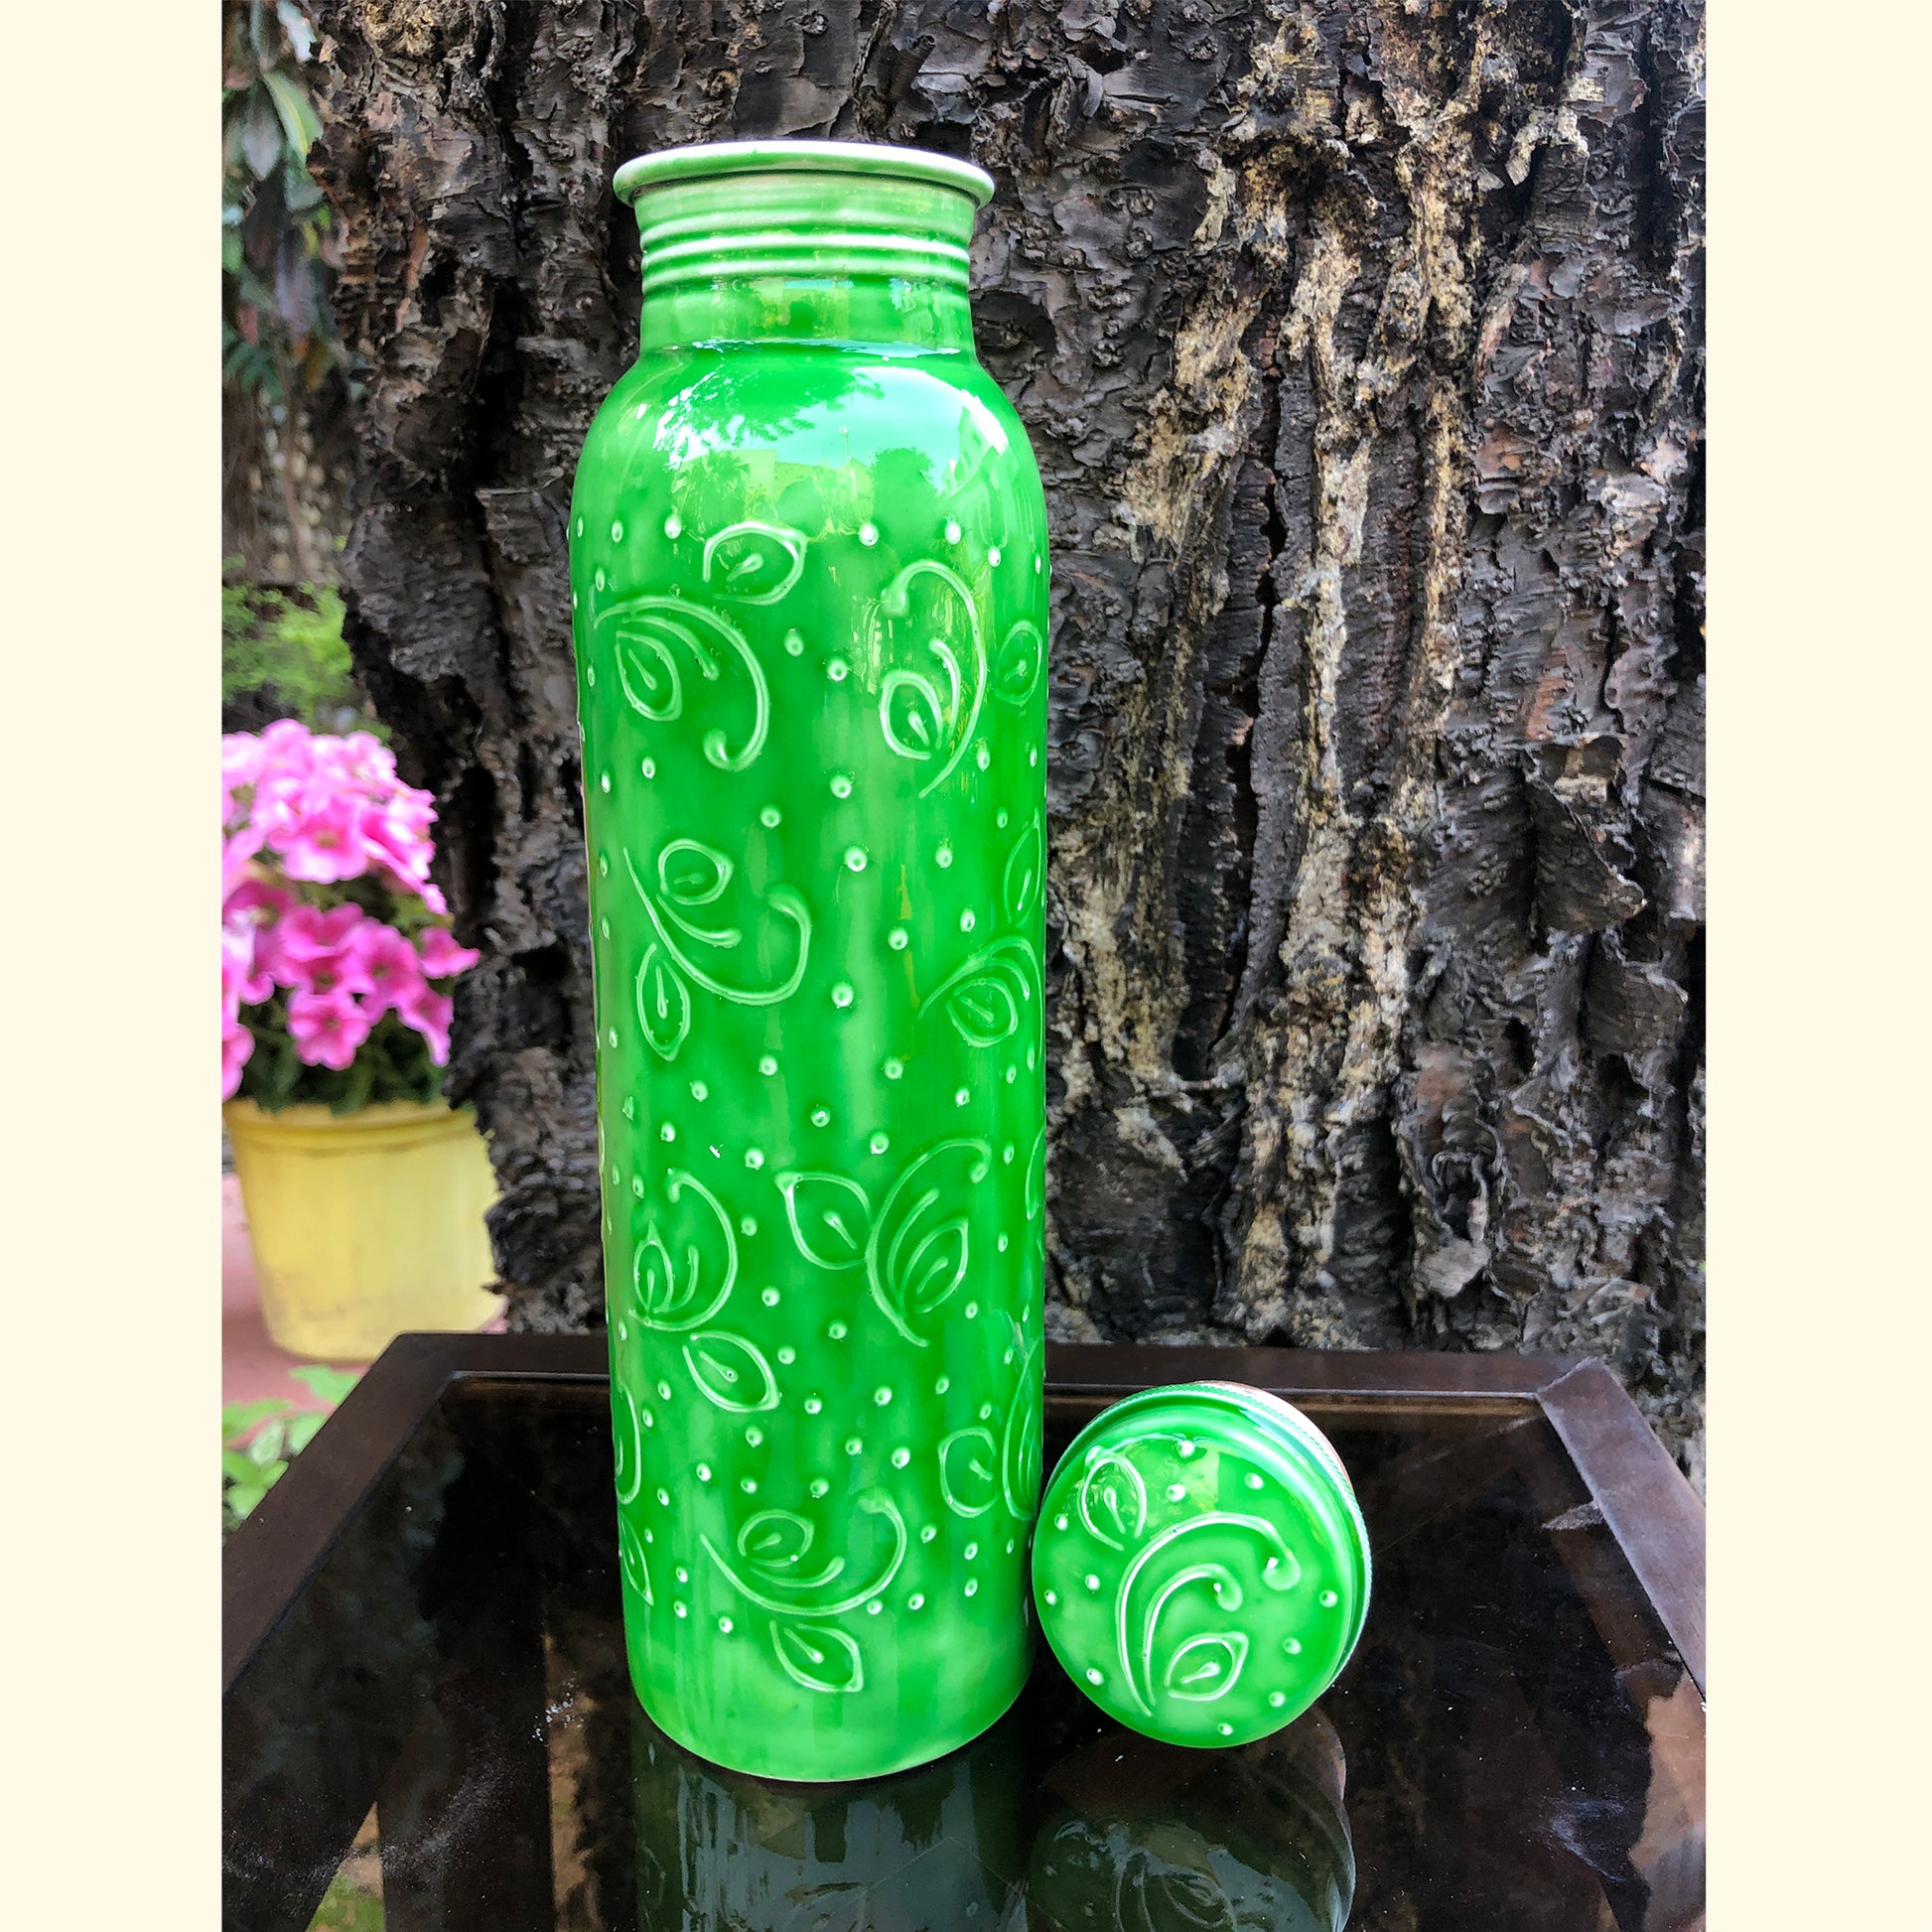 green coloured copper bottles online in unique designs